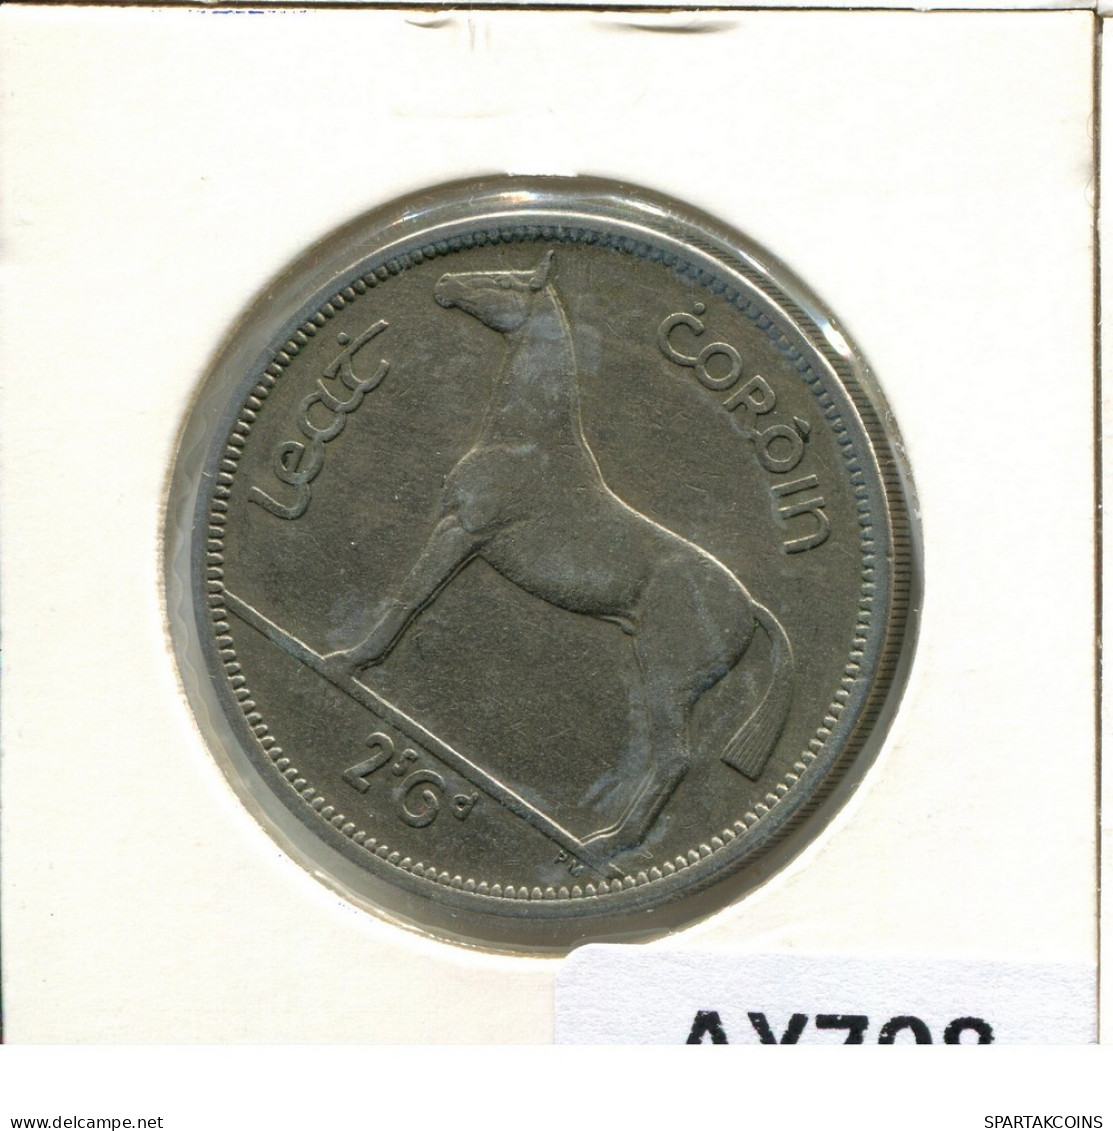 1/2 CROWN 1954 IRELAND Coin #AY708.U.A - Irlanda